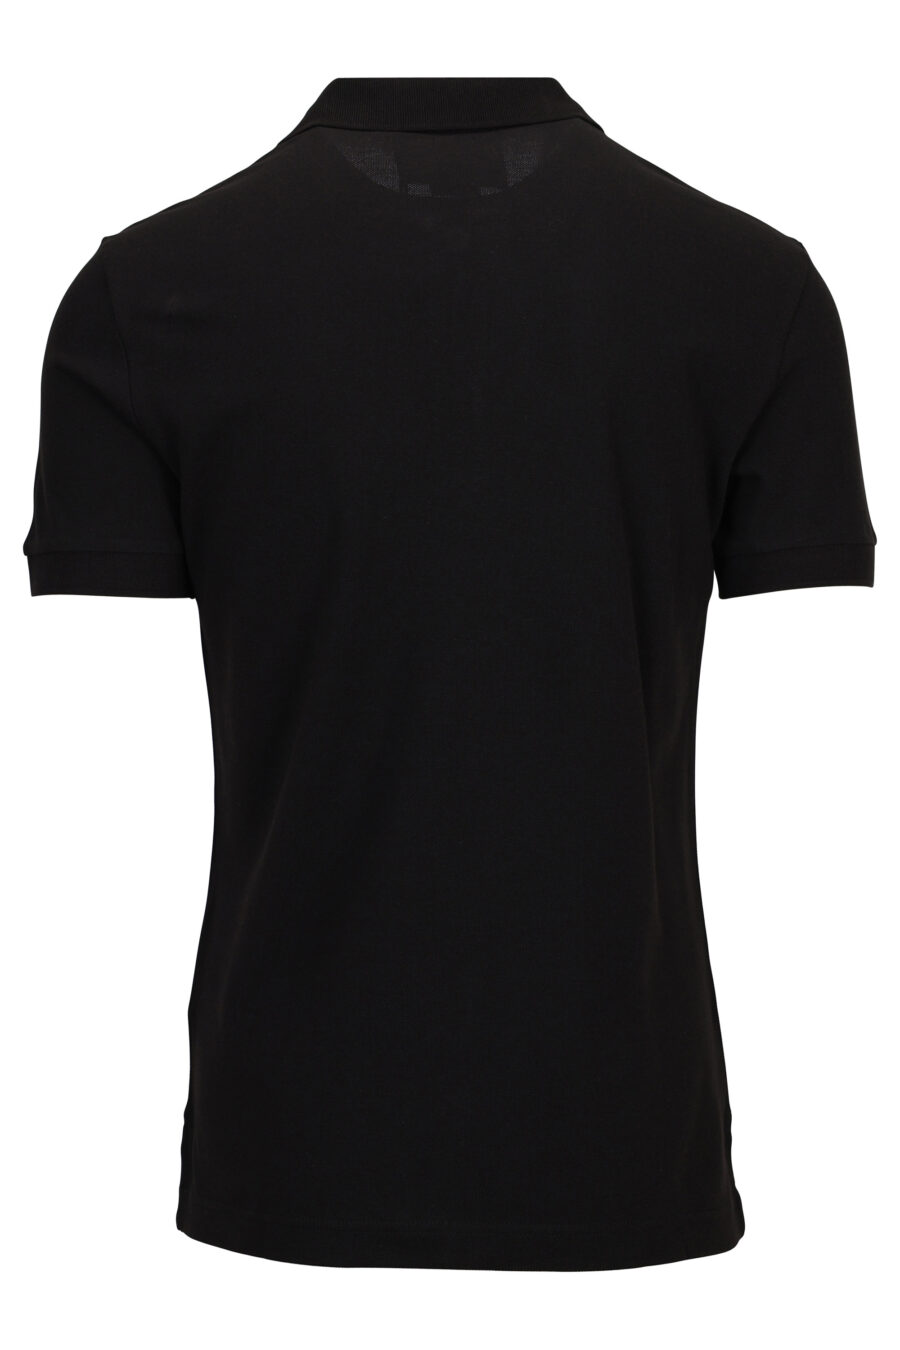 Black polo shirt with zip and circular mini logo - 8052019579598 1